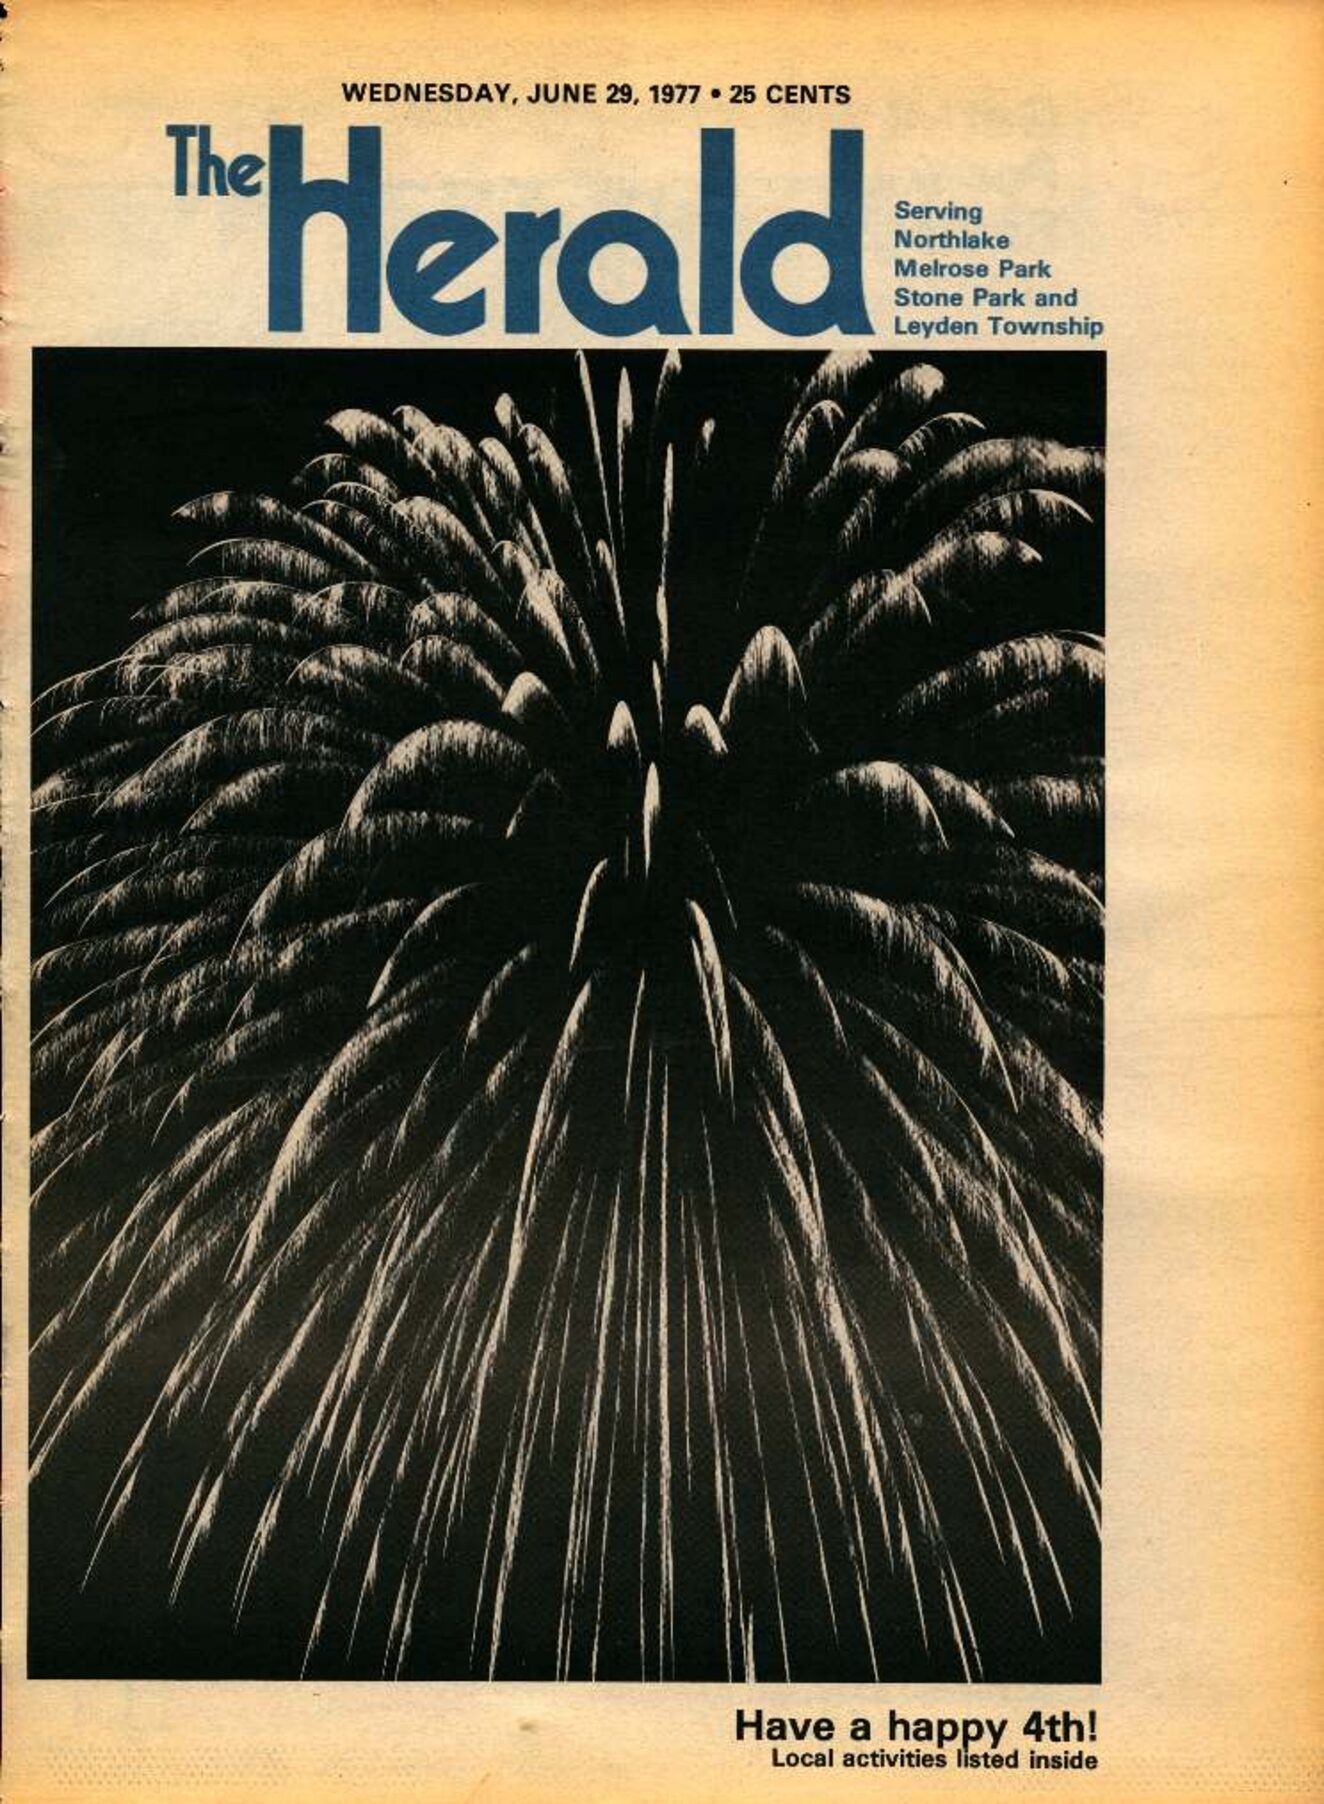 The Herald – 19770629